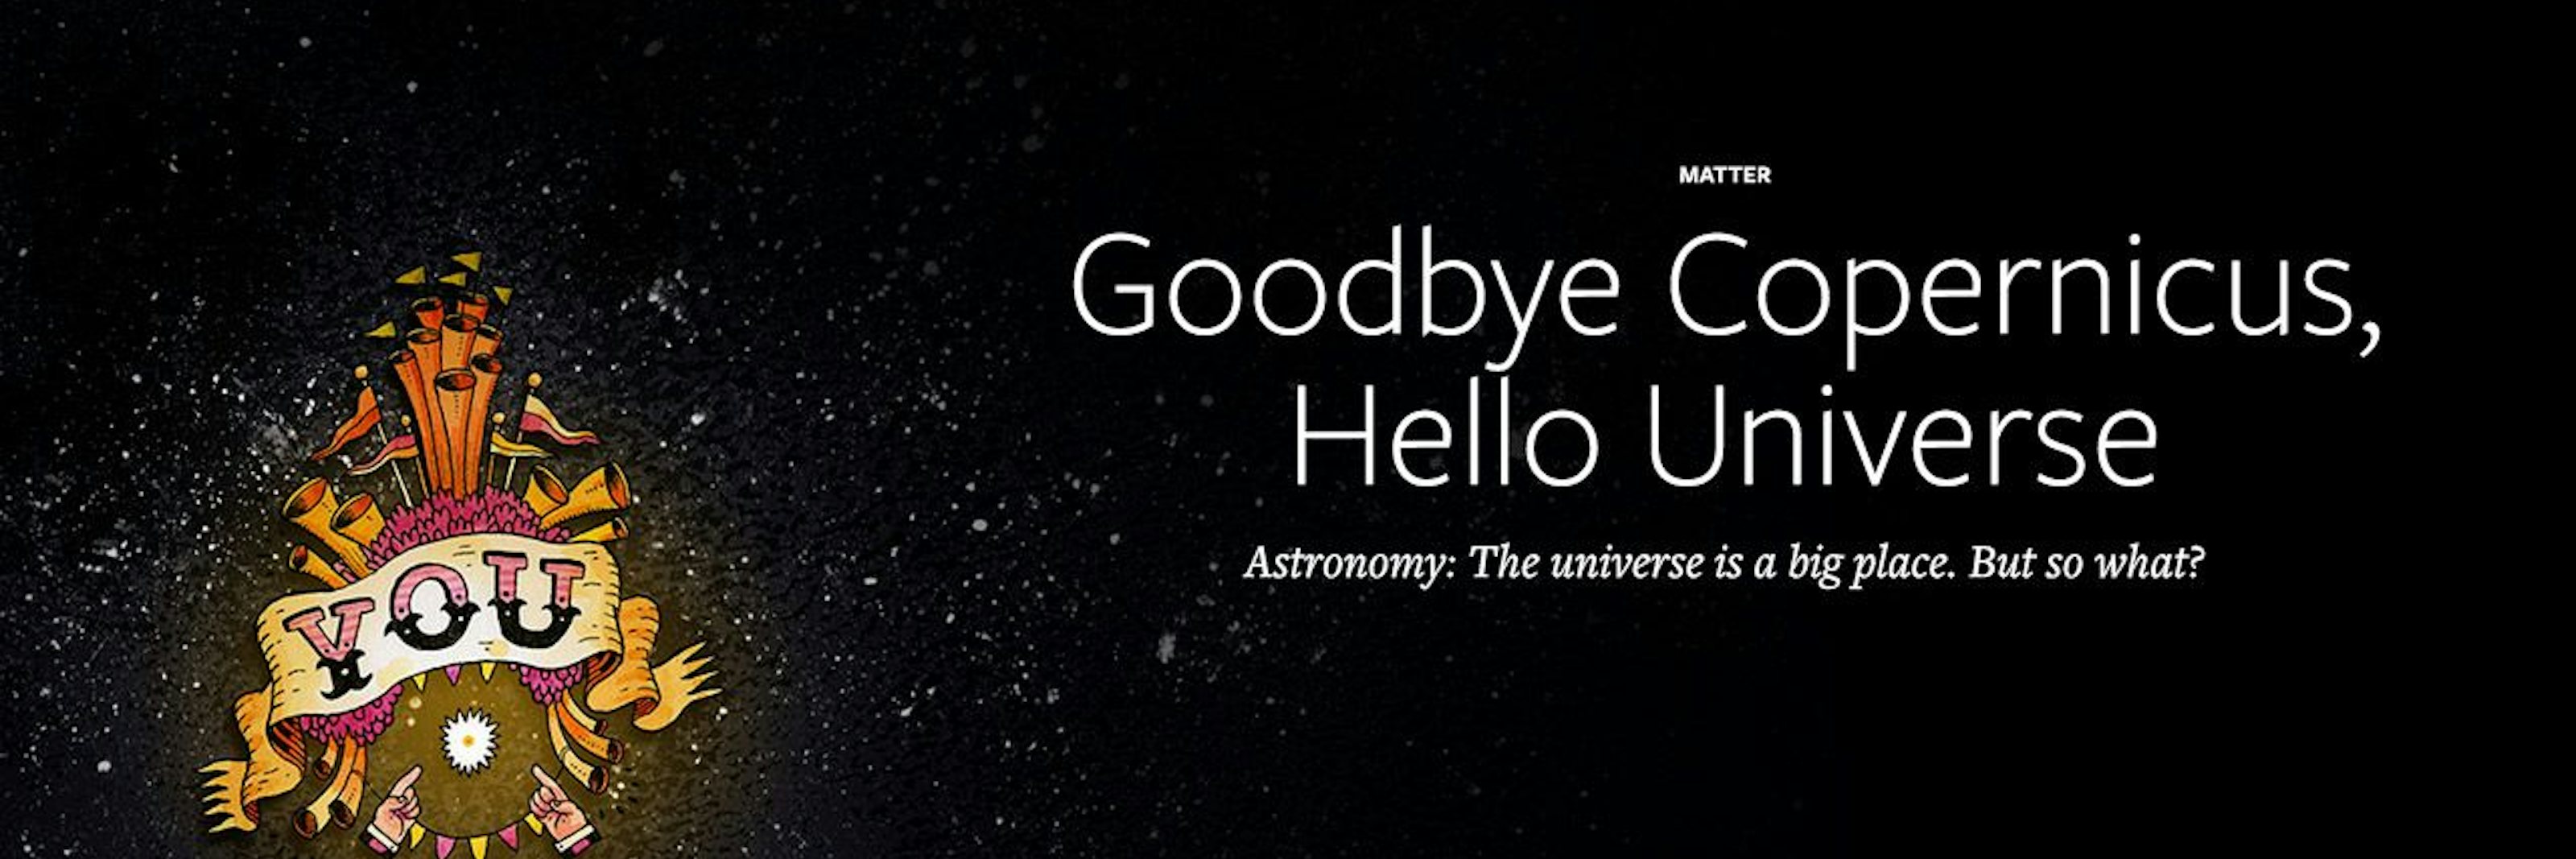 Goodbye_Copernicus_Hello_Universe_1280x546.jpg